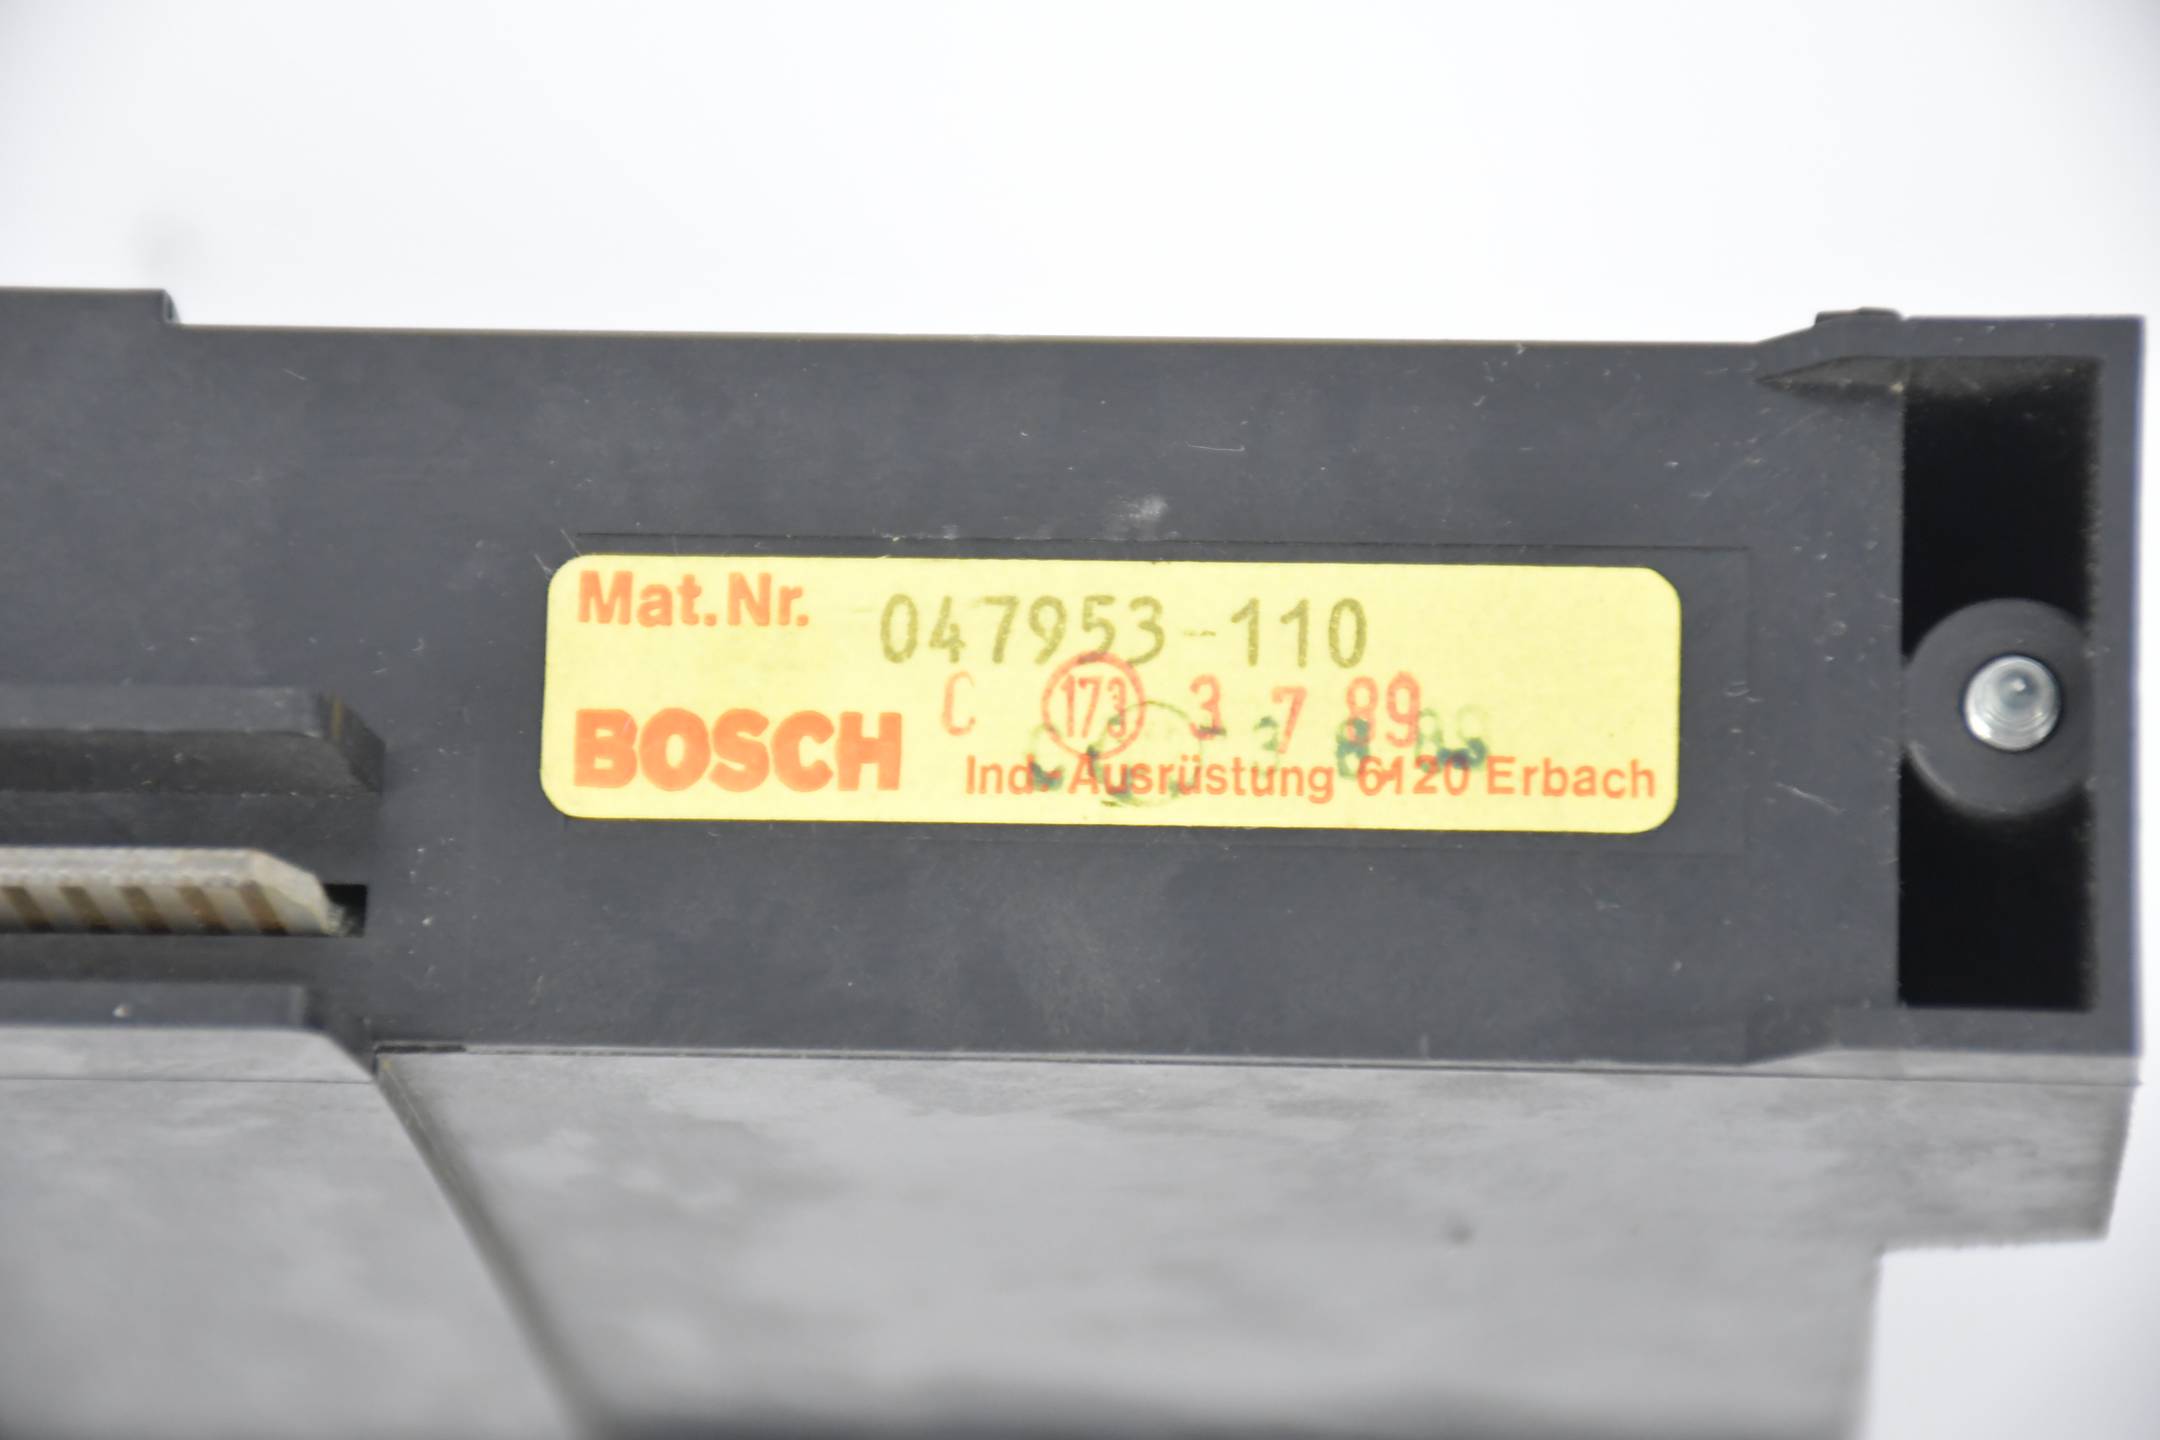 Bosch Digital Output PC 200 047953-110 A24V-/2A